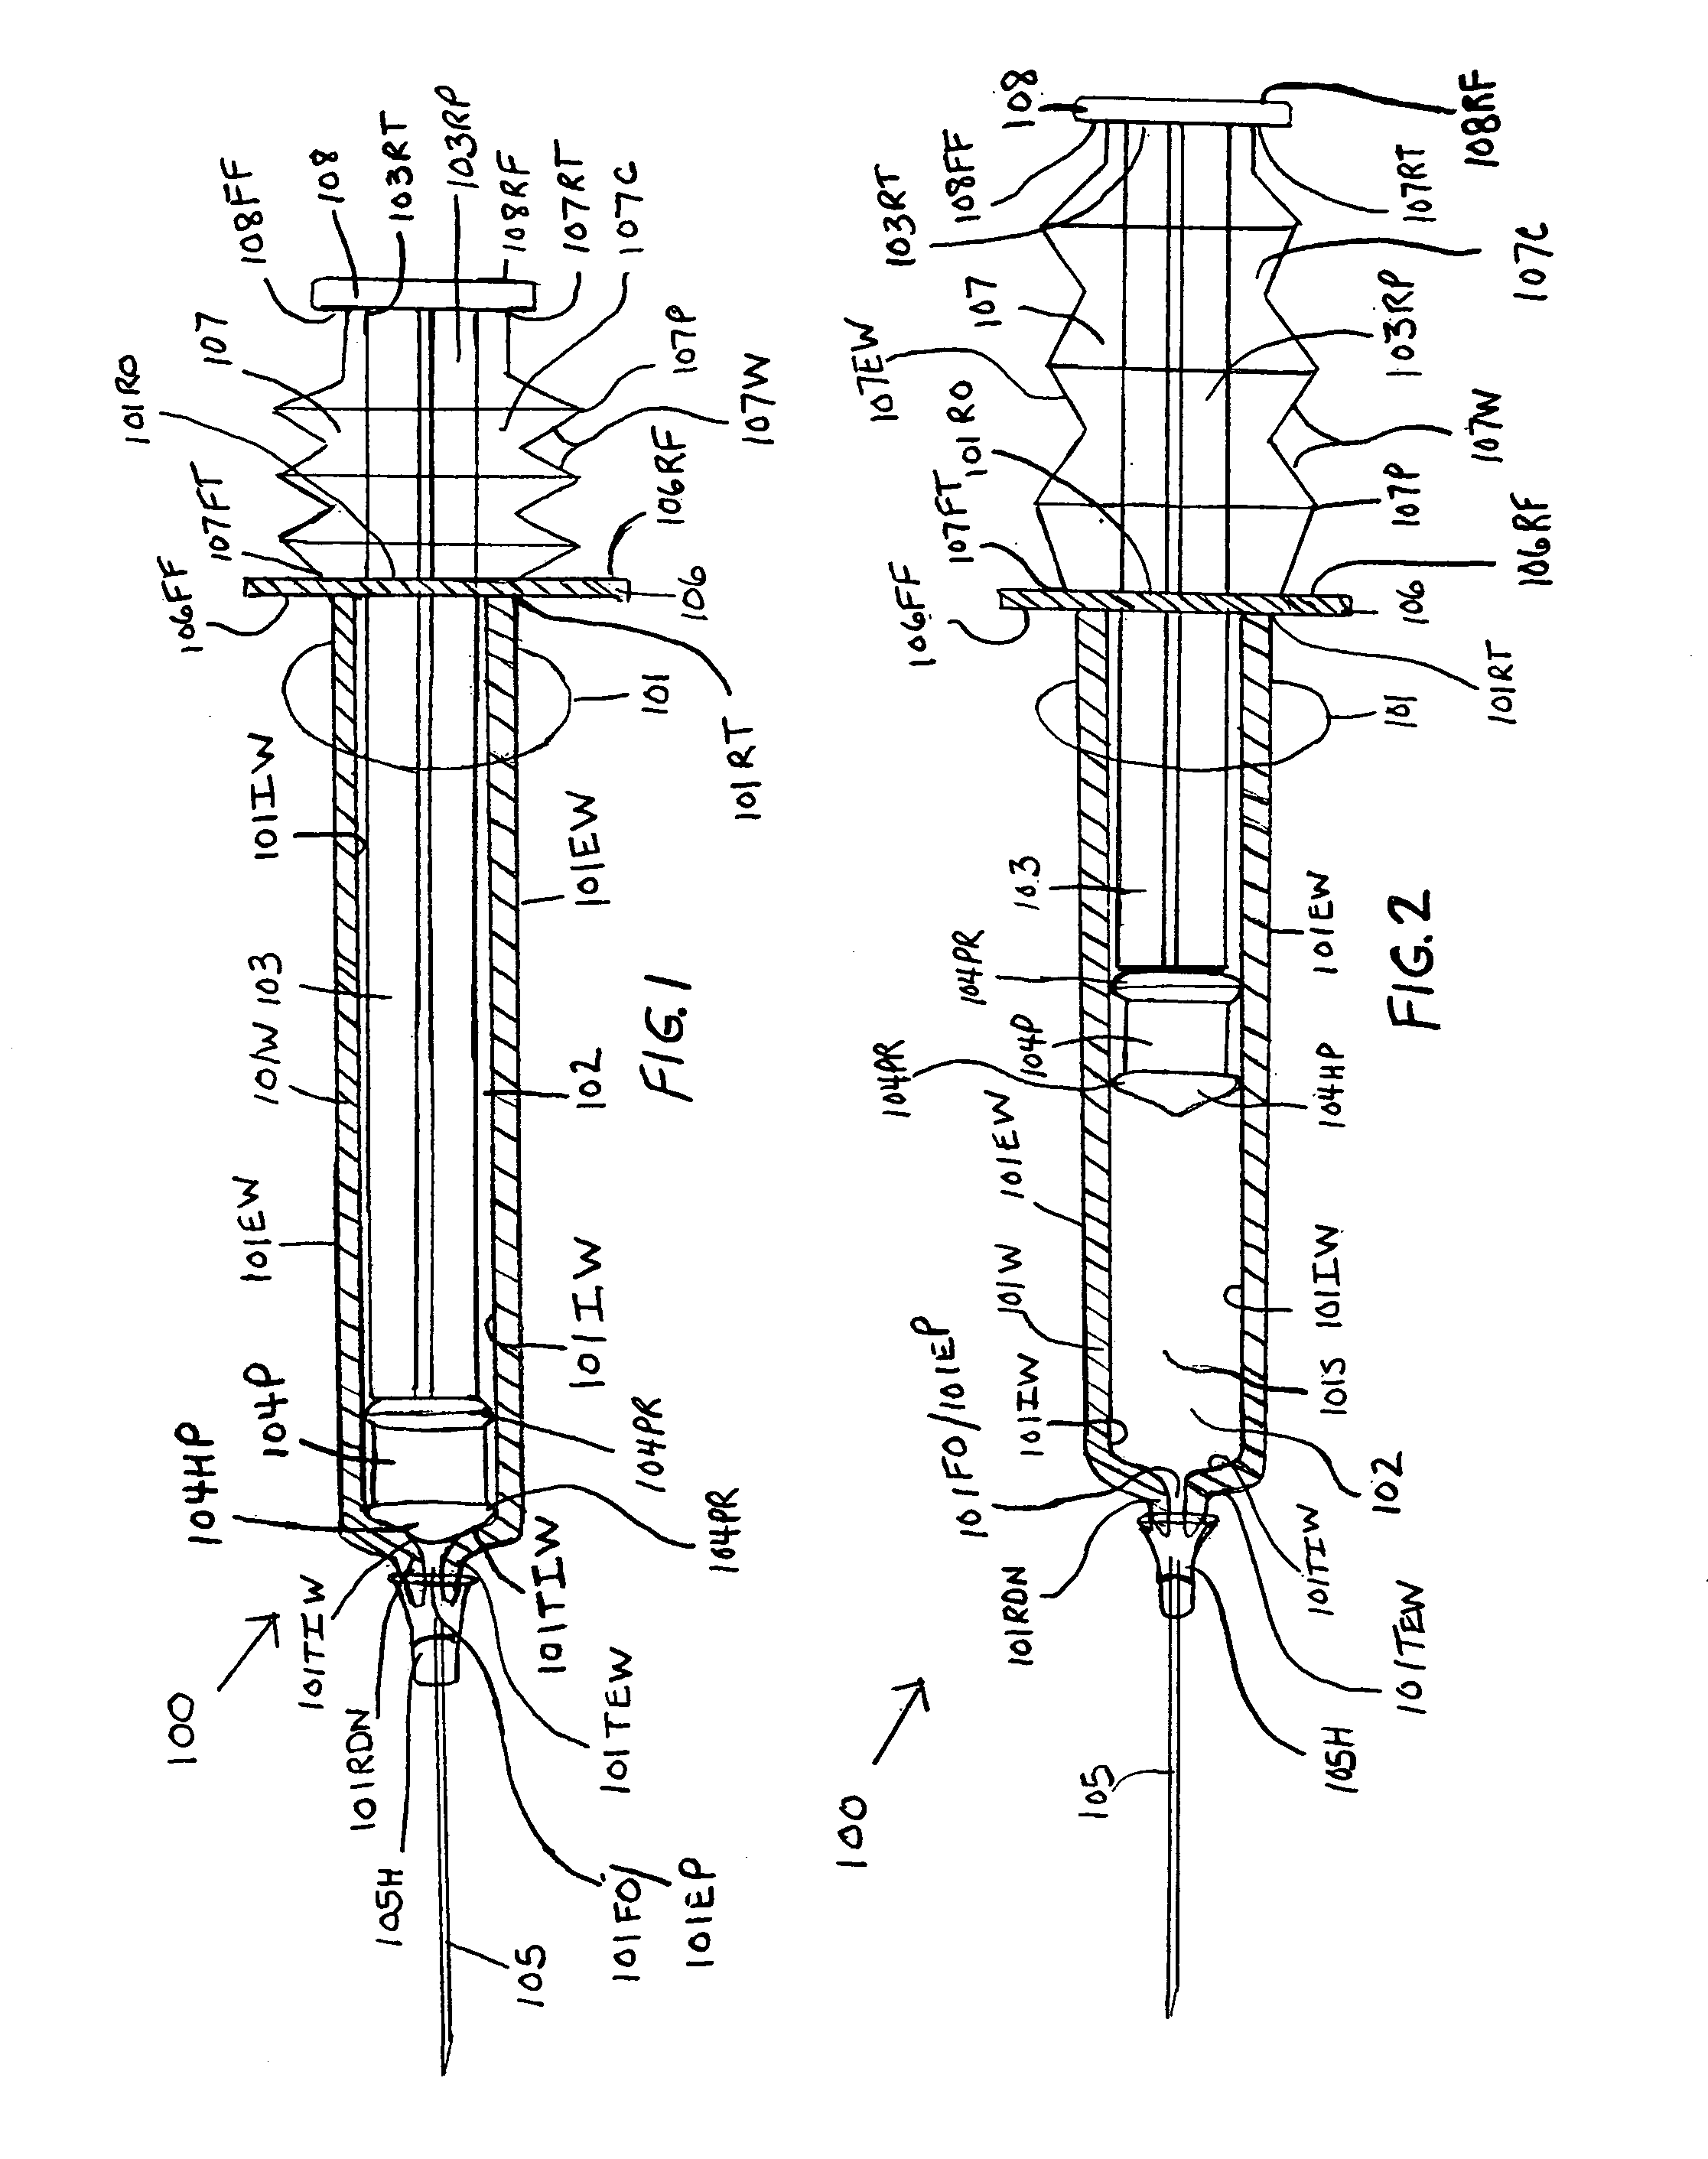 Syringe and method of using